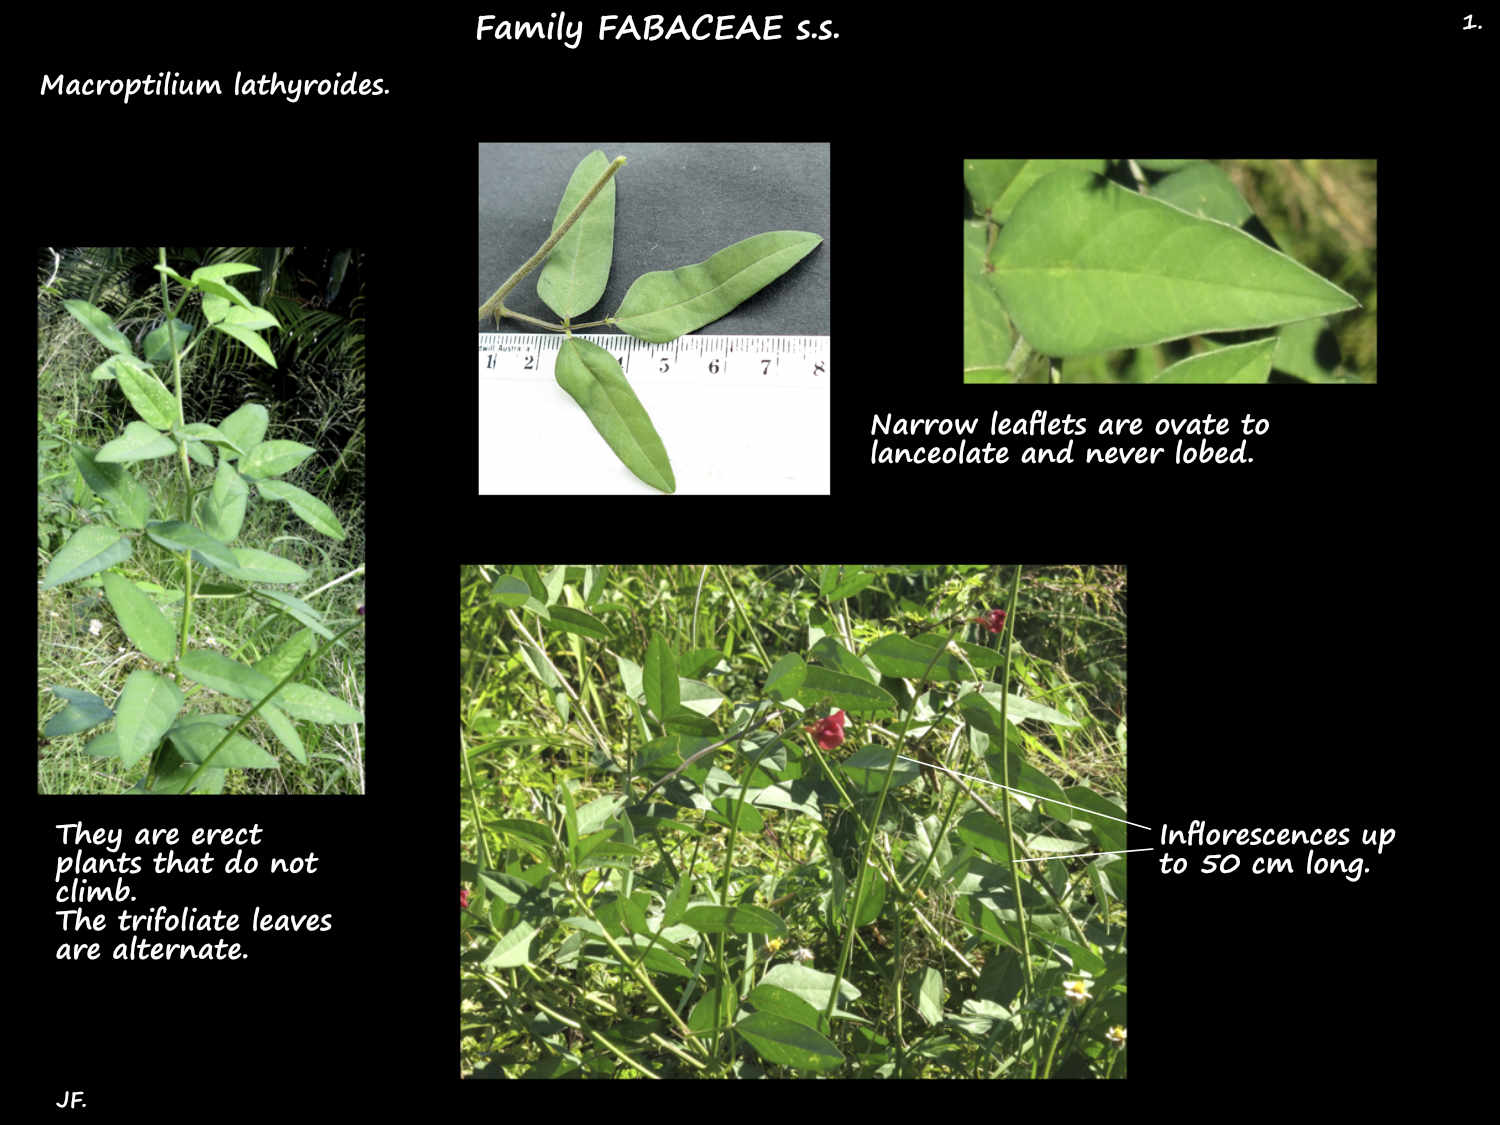 1 Macroptilium lathyroides plant & leaves